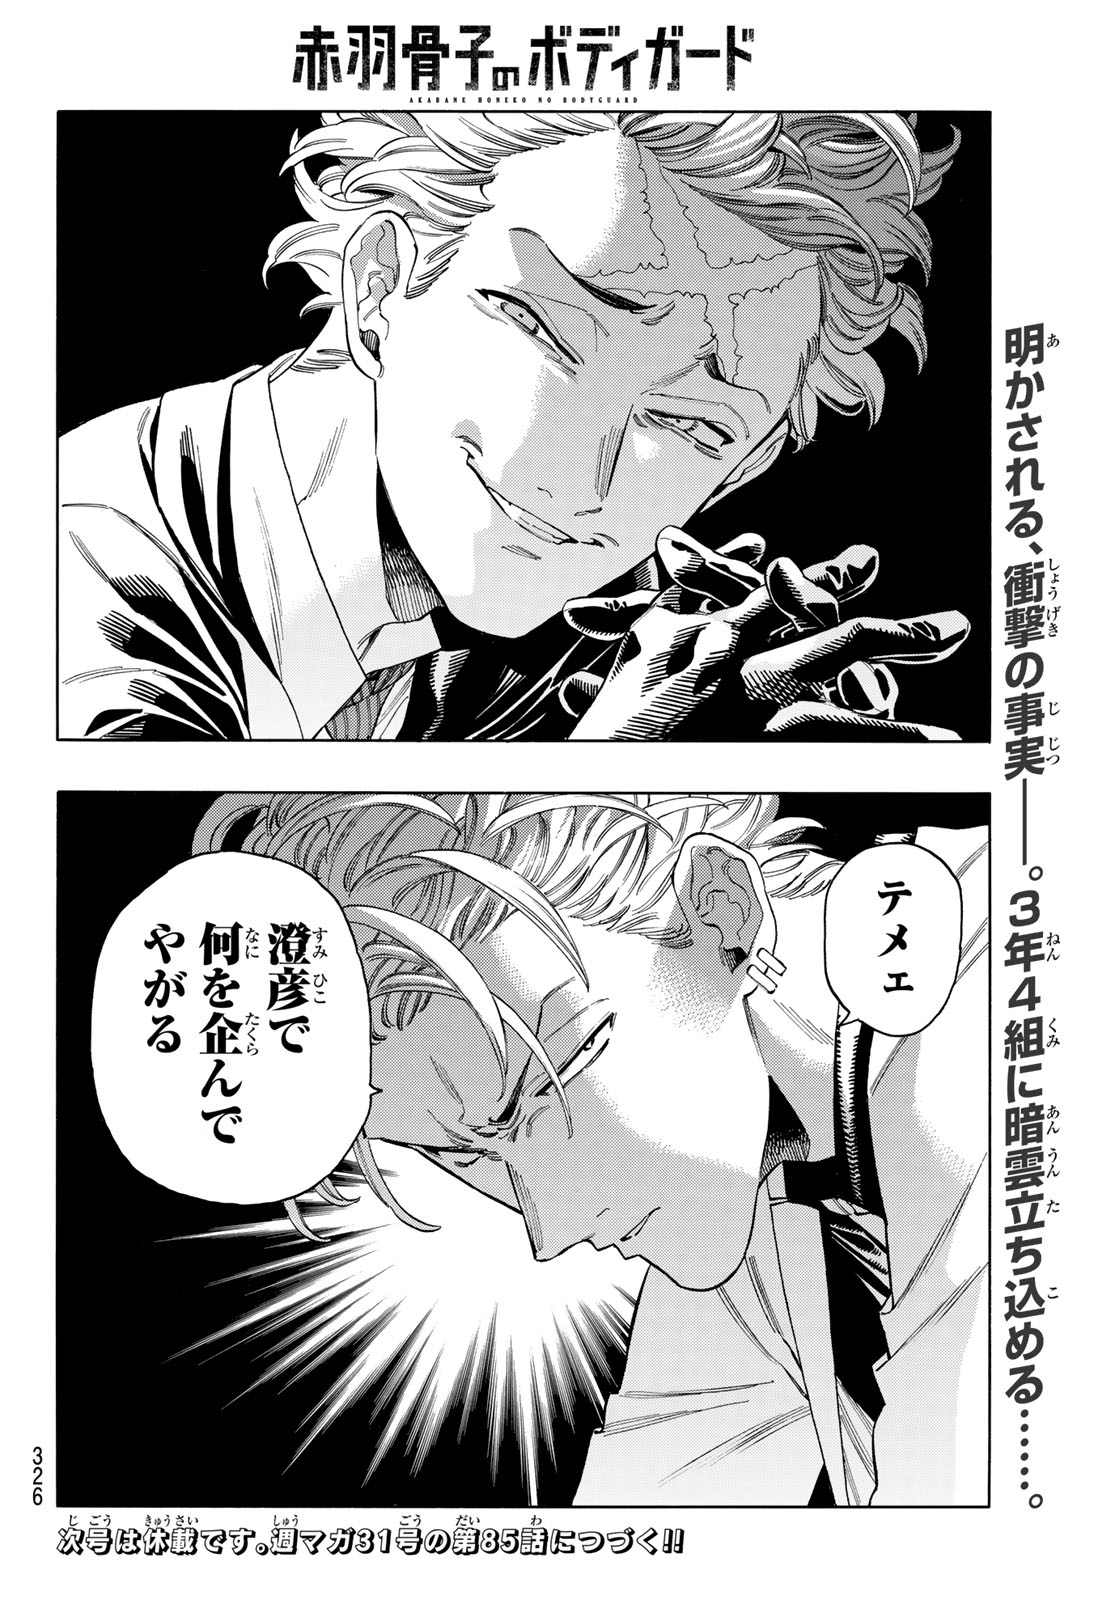 Akabane Honeko no Bodyguard - Chapter 84 - Page 20